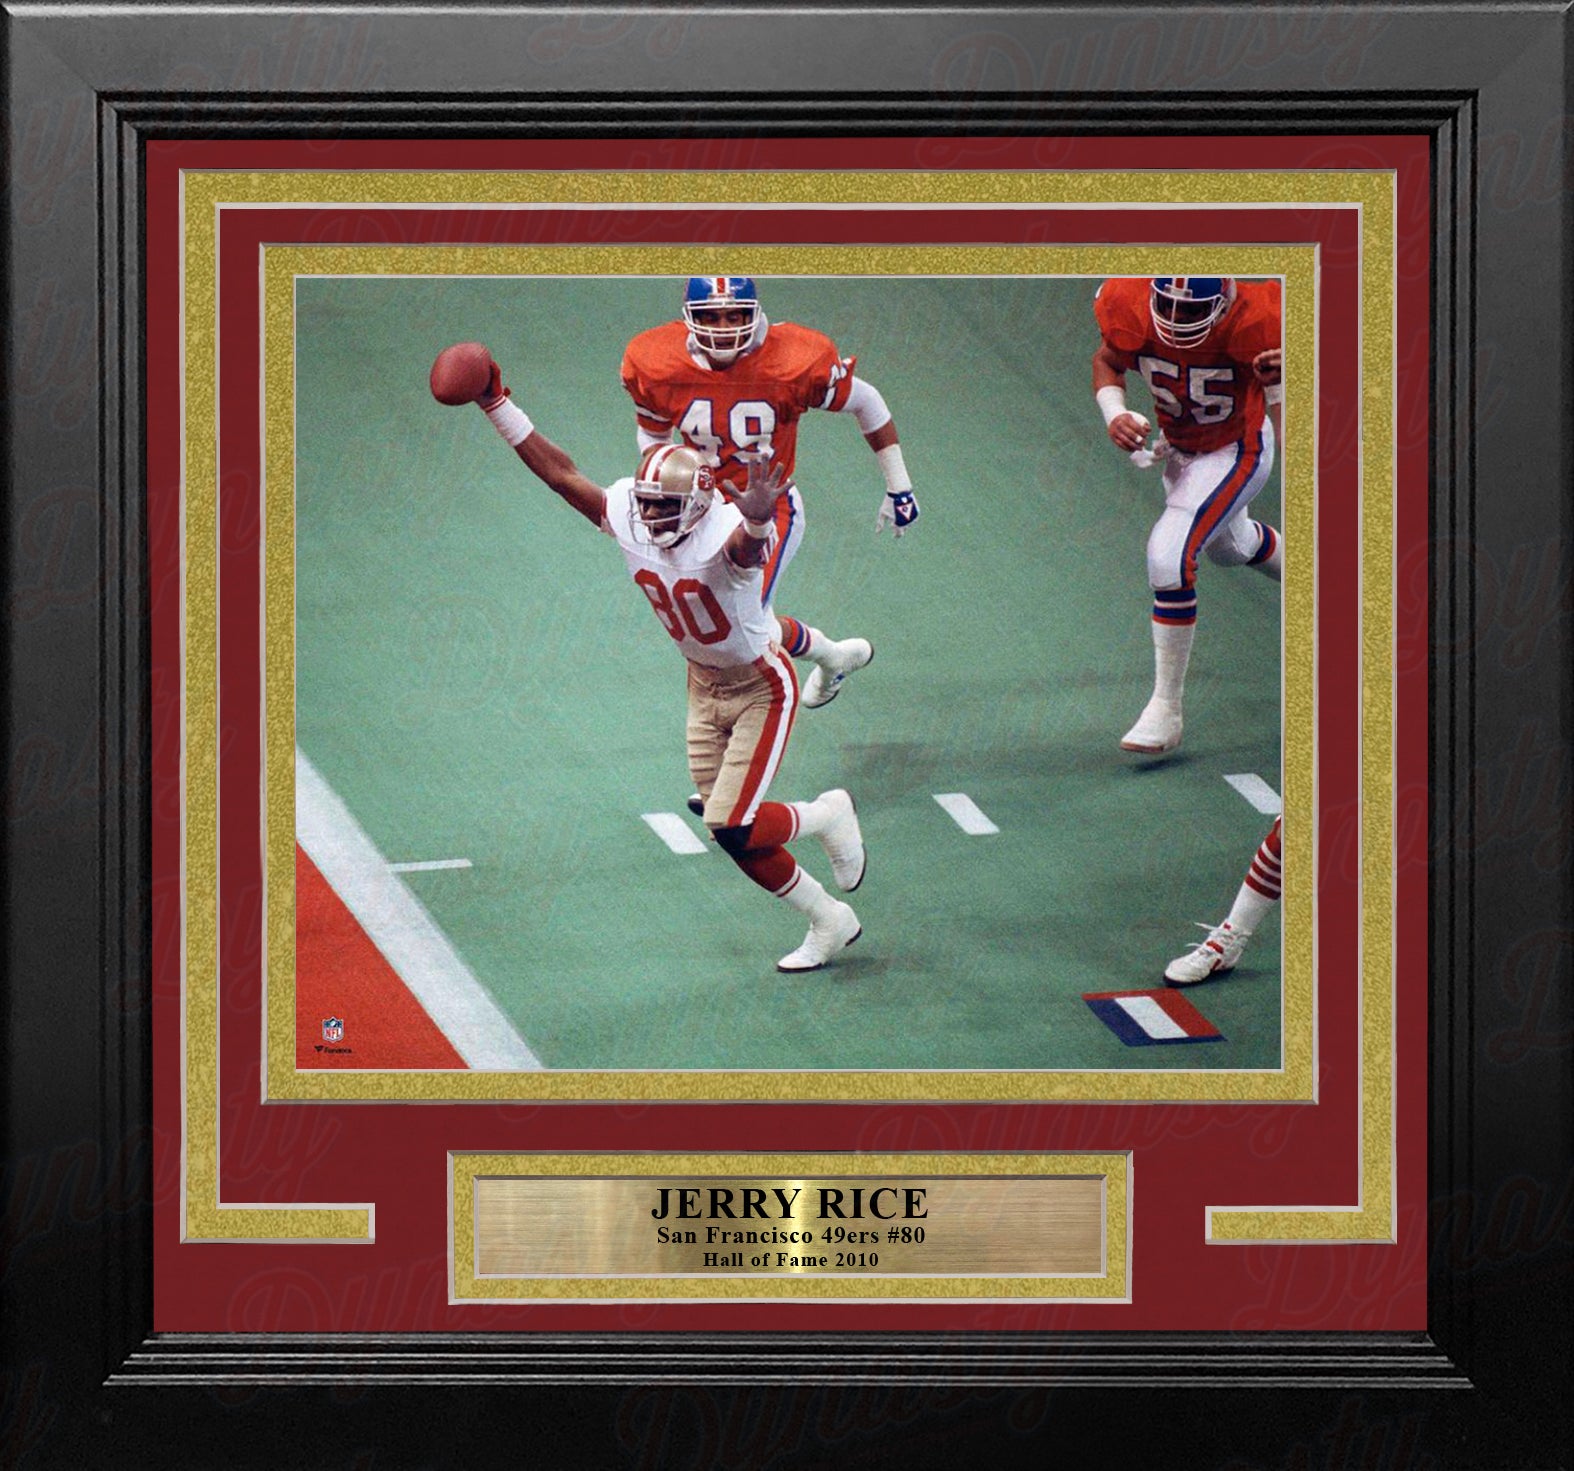 Jerry Rice, NFL Hall of Famer, 49ers Legend